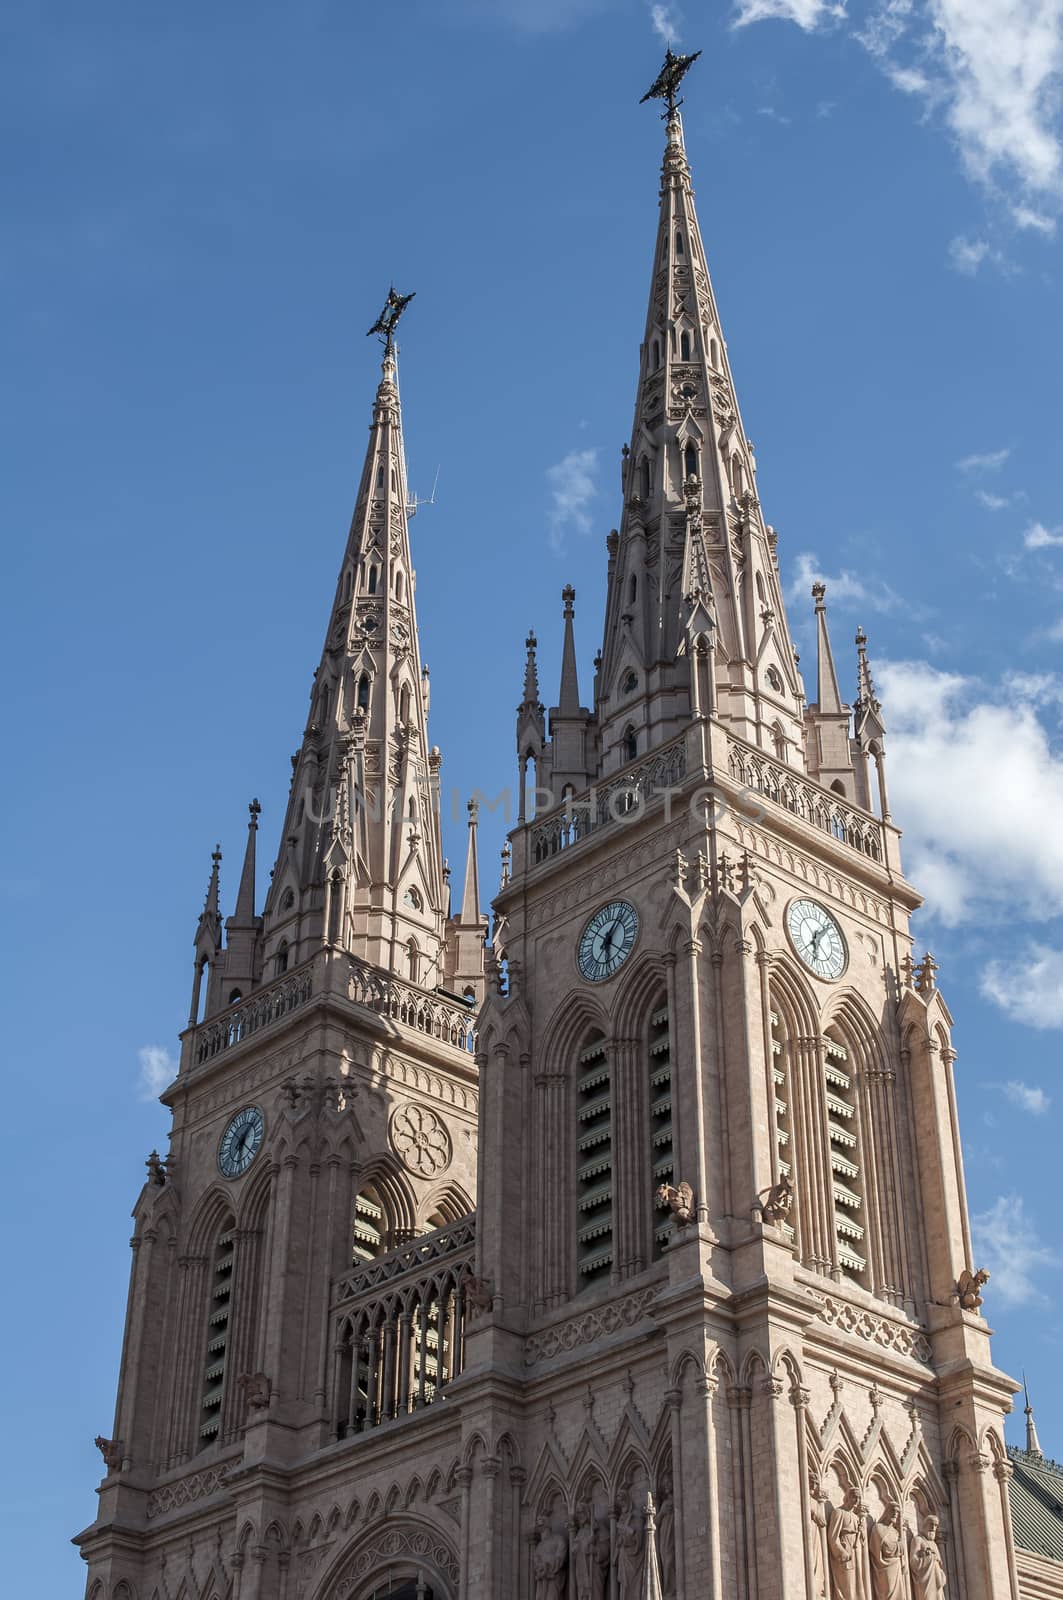 Neo-gothic Lujan Basilica in Lujan, Buenos Aires, Argentina.